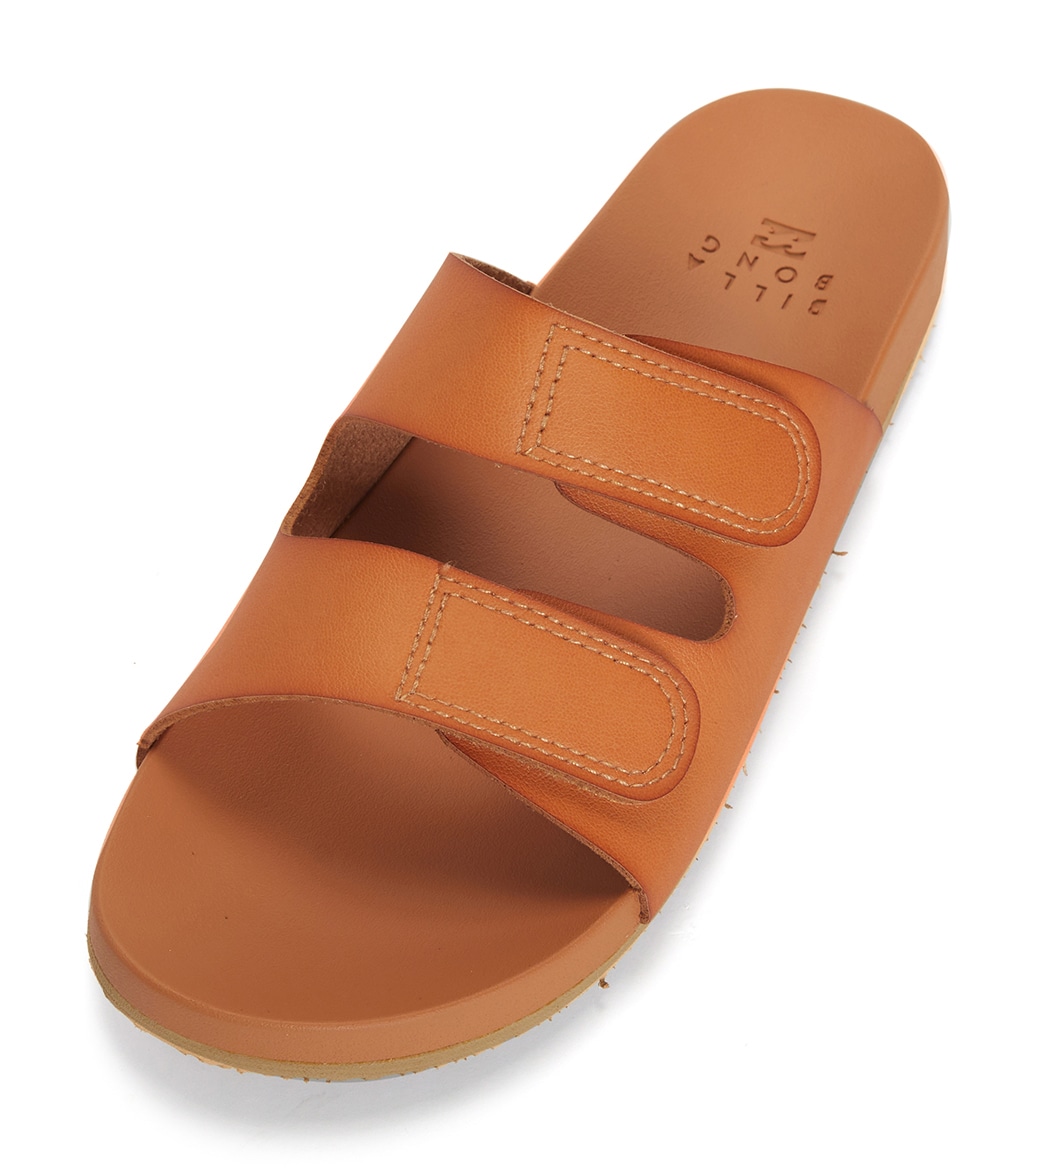 Billabong Women's Shay Slides Sandals - Tan 10 - Swimoutlet.com